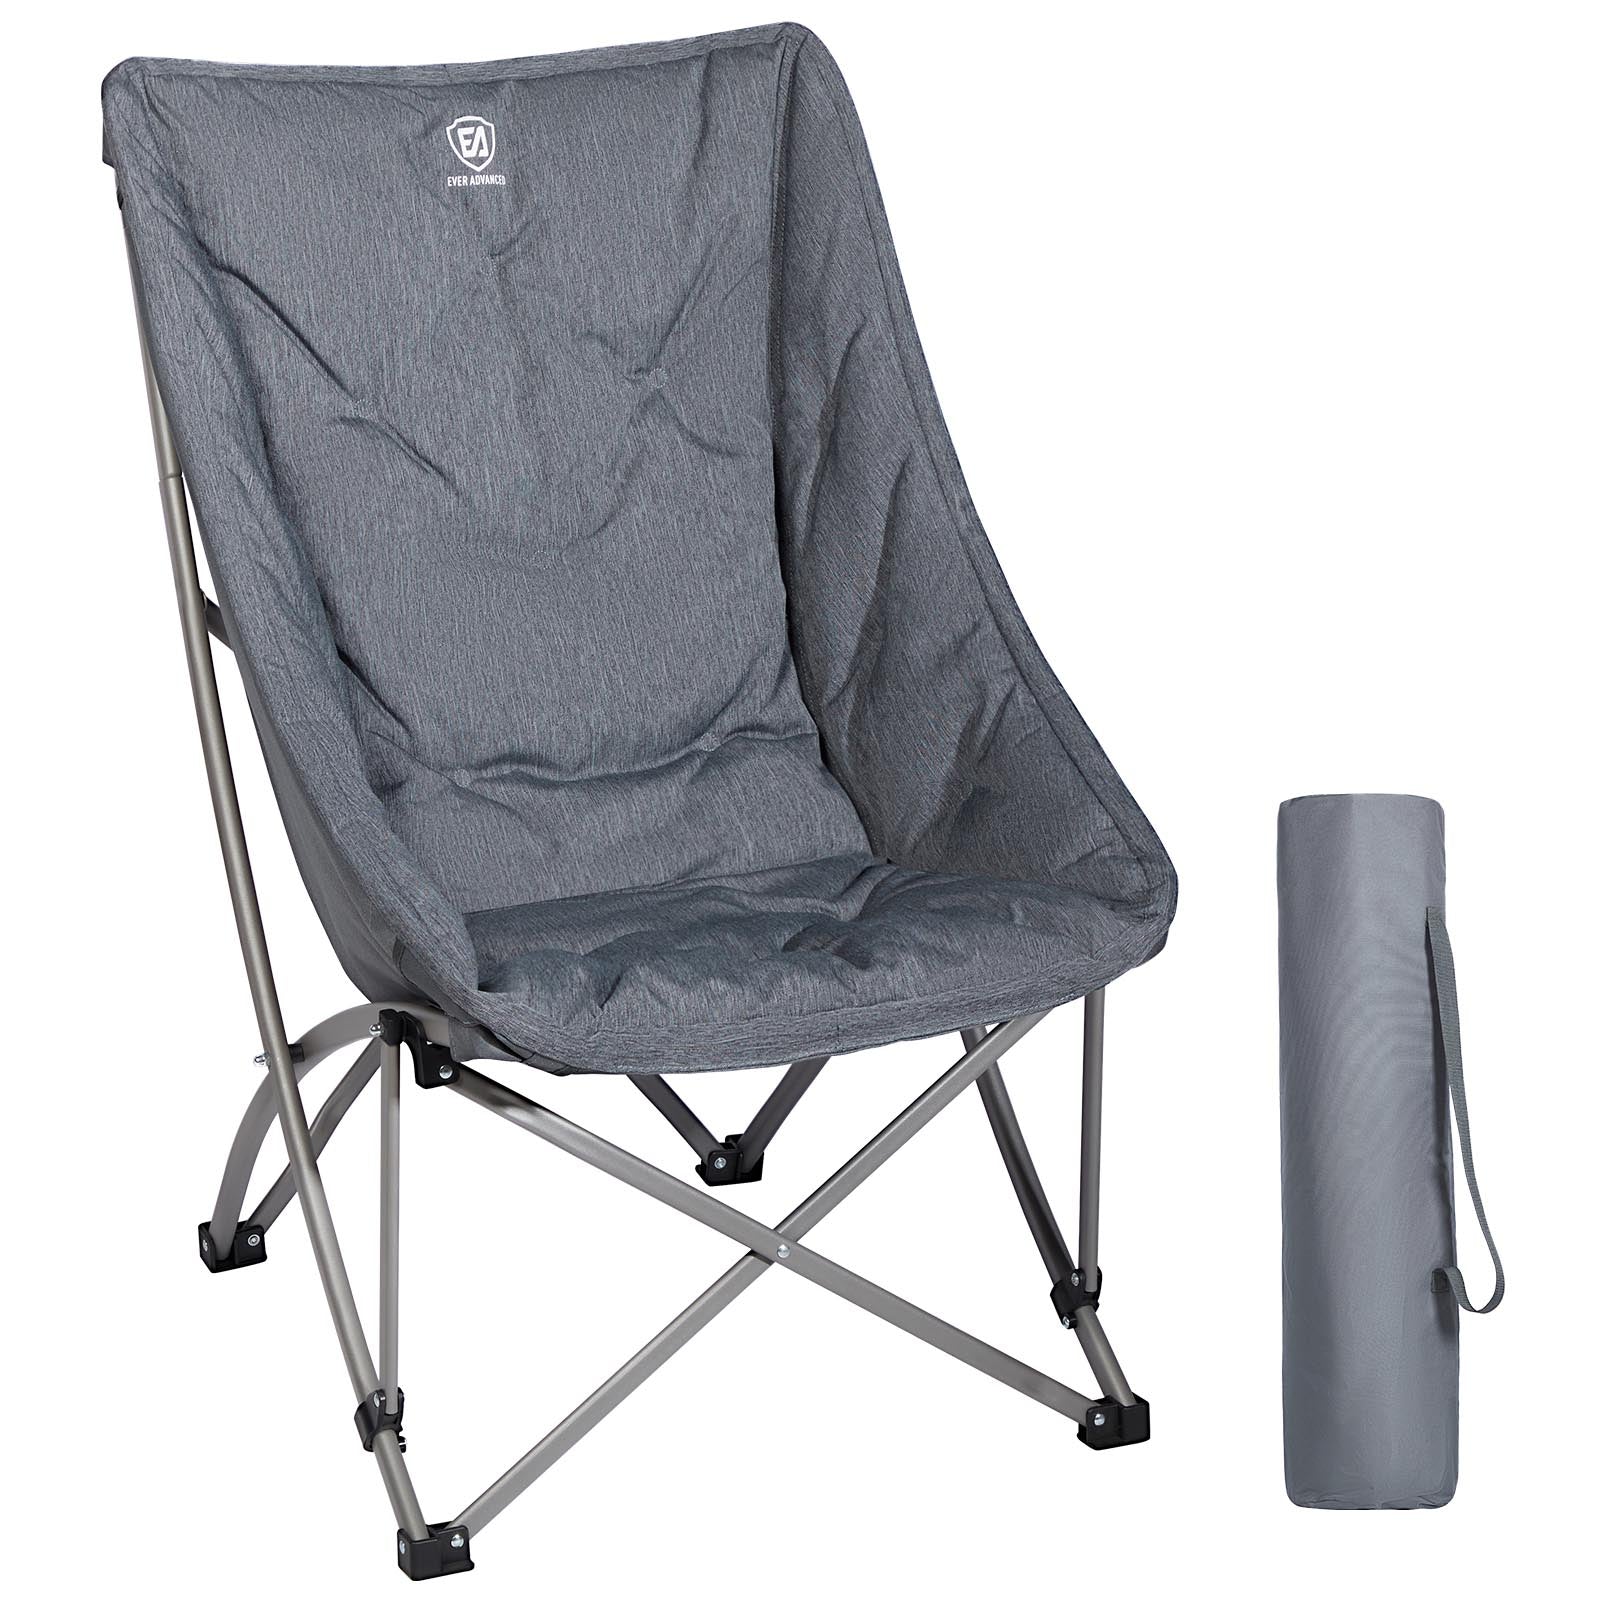 Portable Moon Saucer Chair